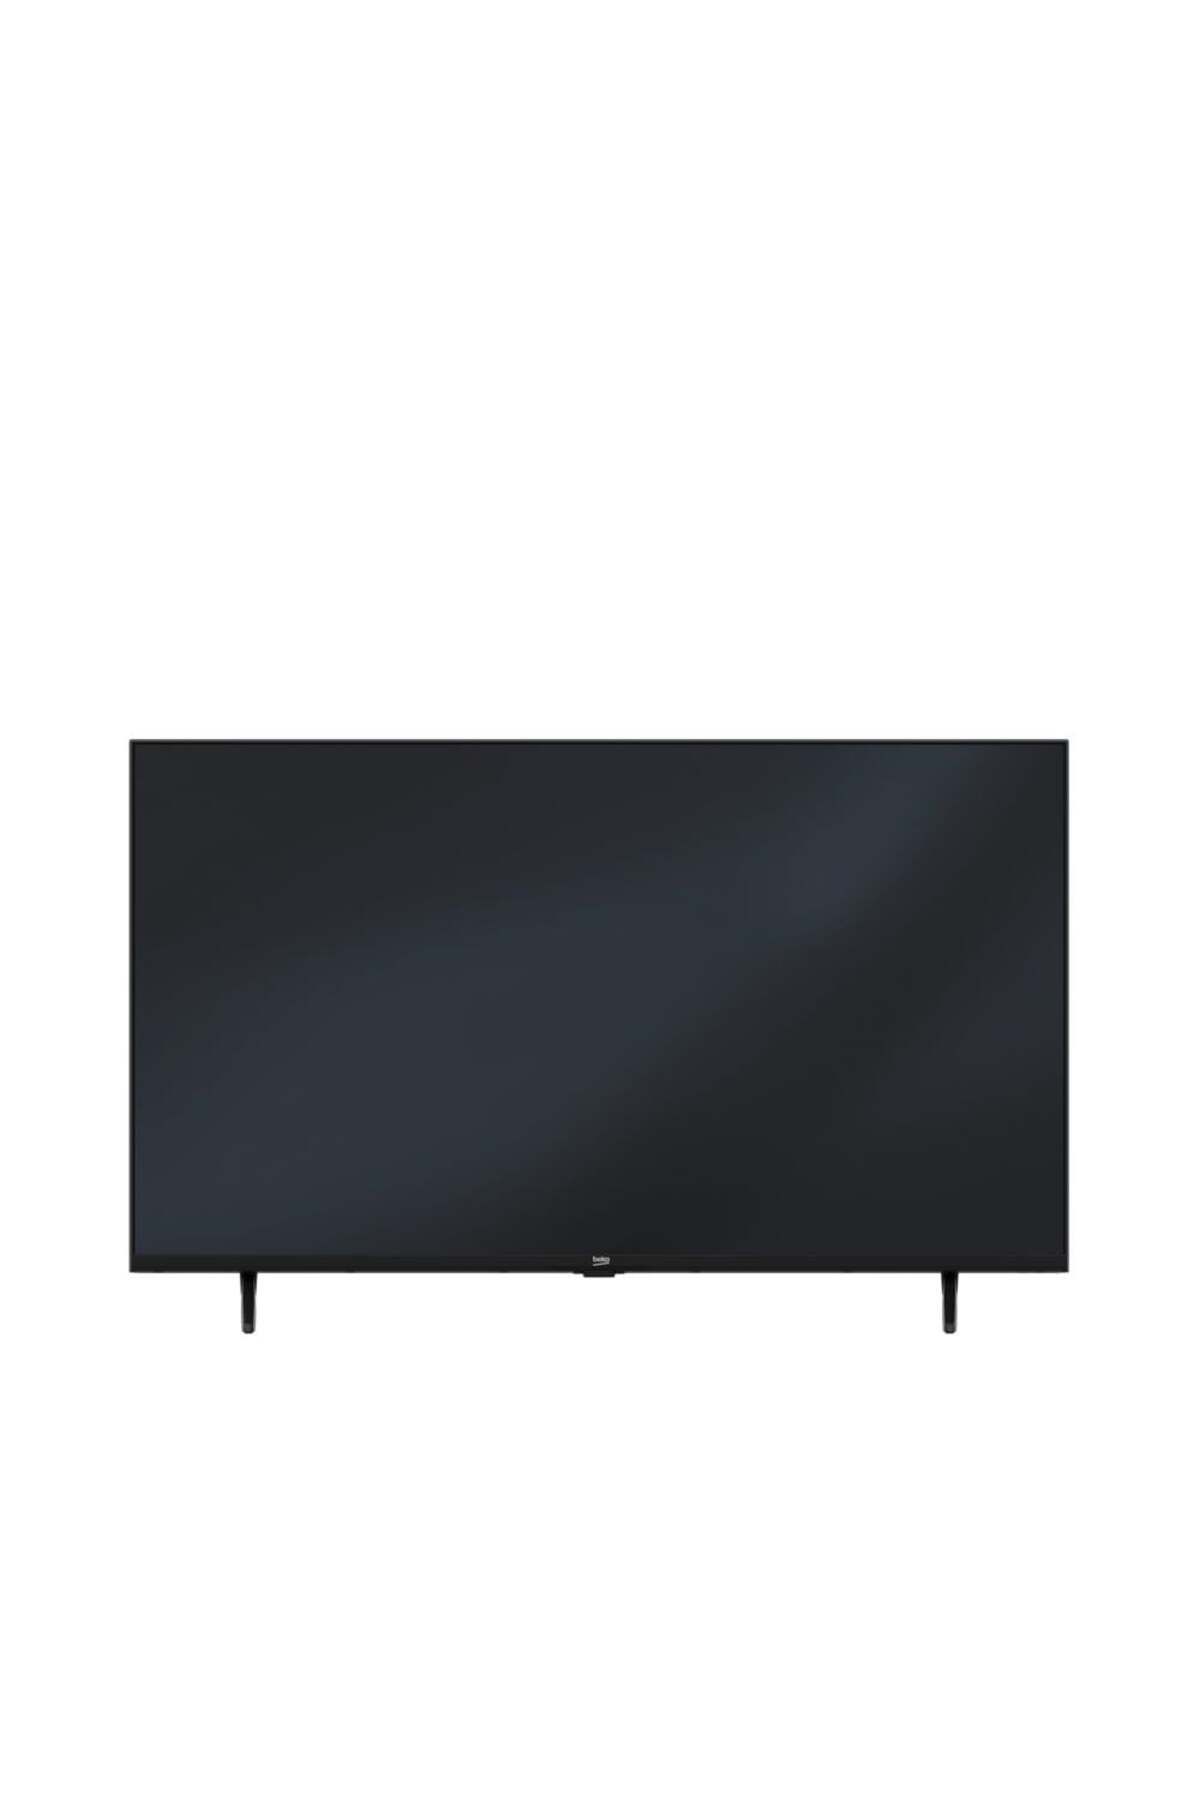 Beko B43 D 695 B /43'' FHD Smart Android TV